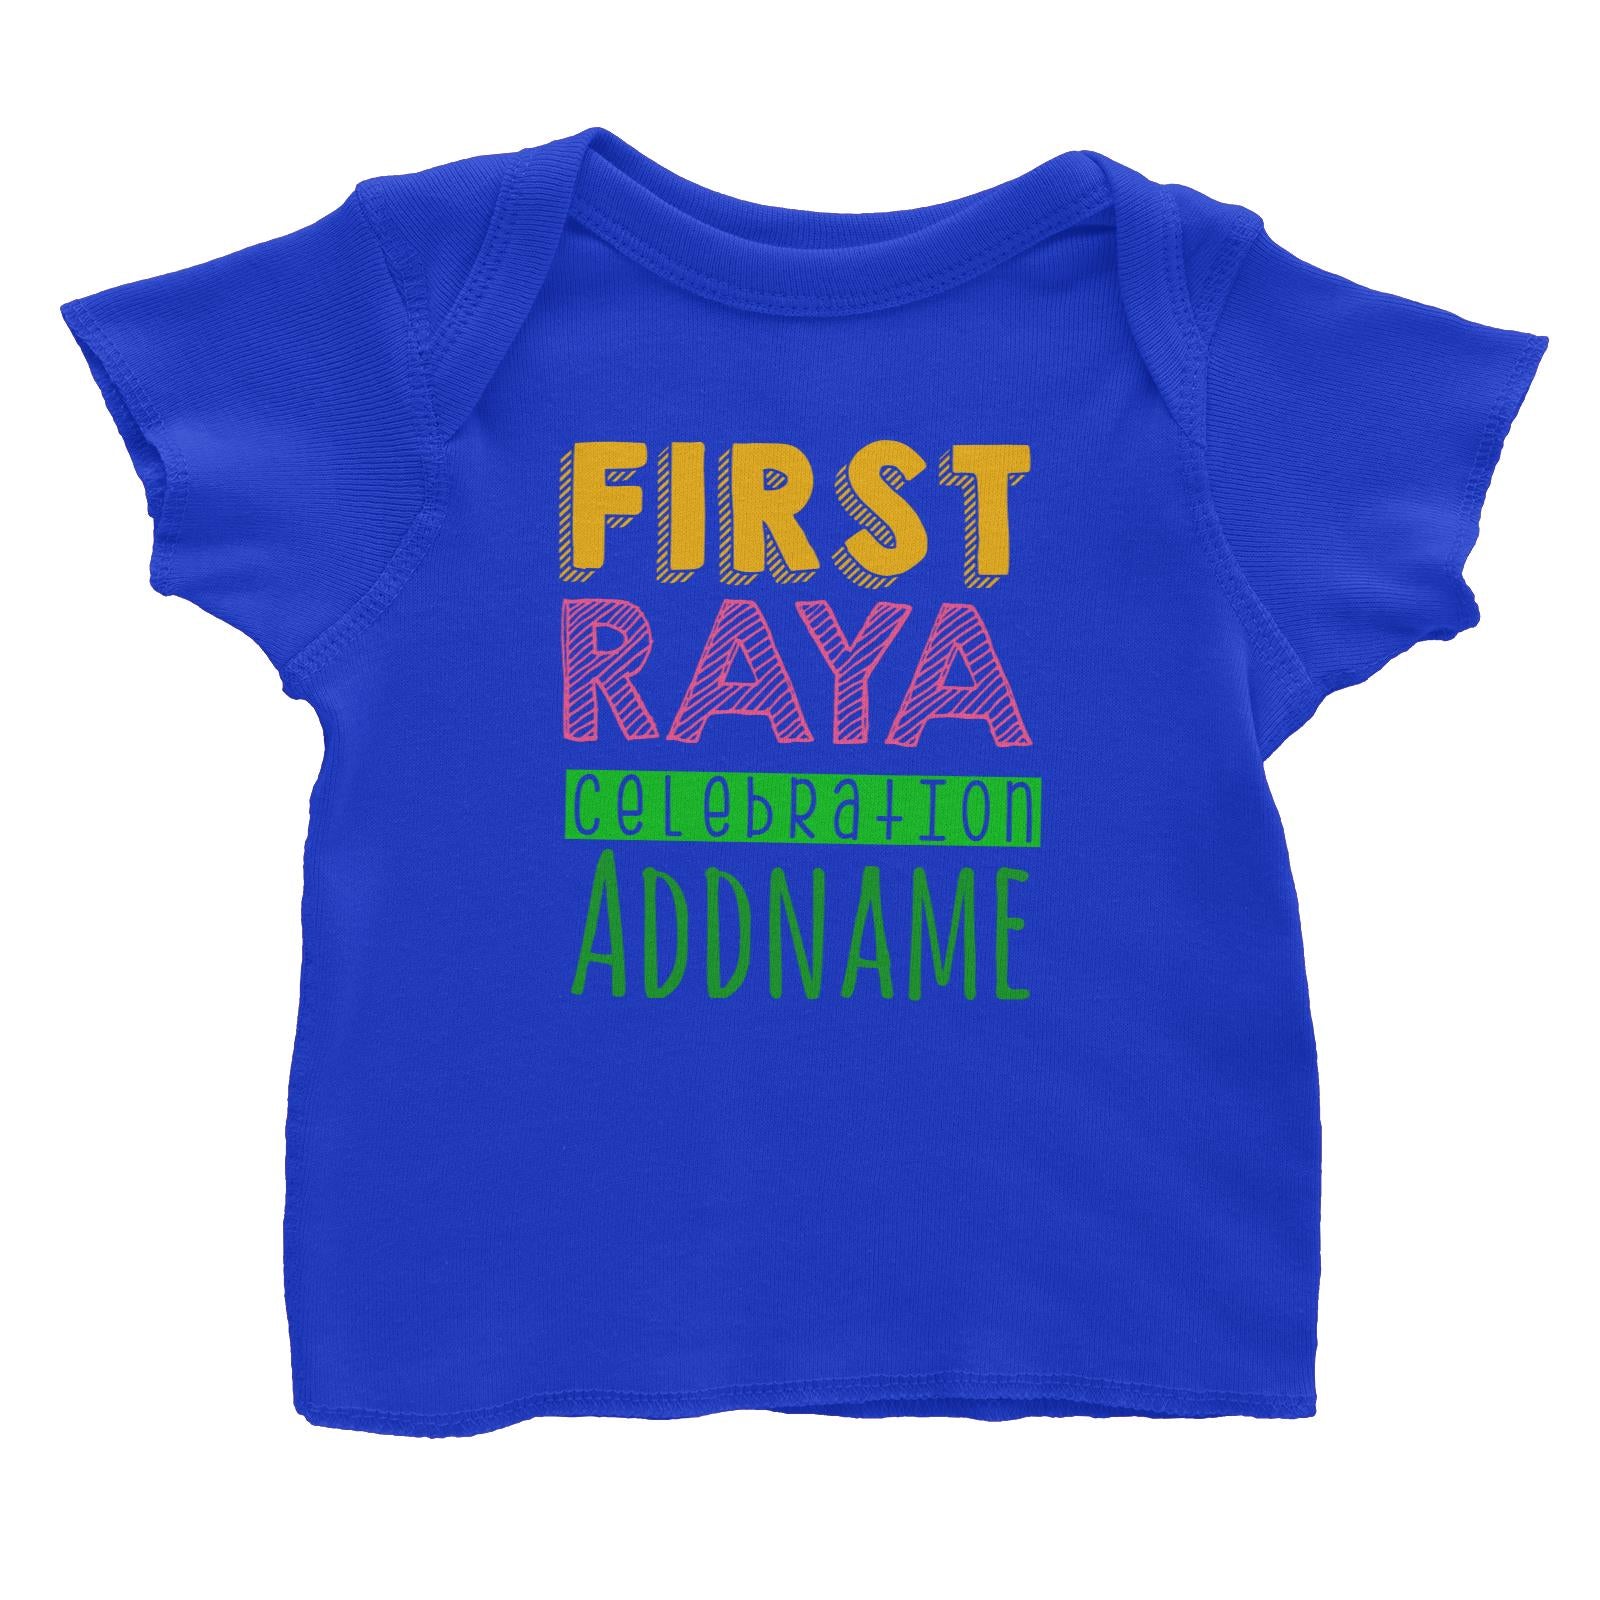 First Raya Celebration Baby T-Shirt  Personalizable Designs